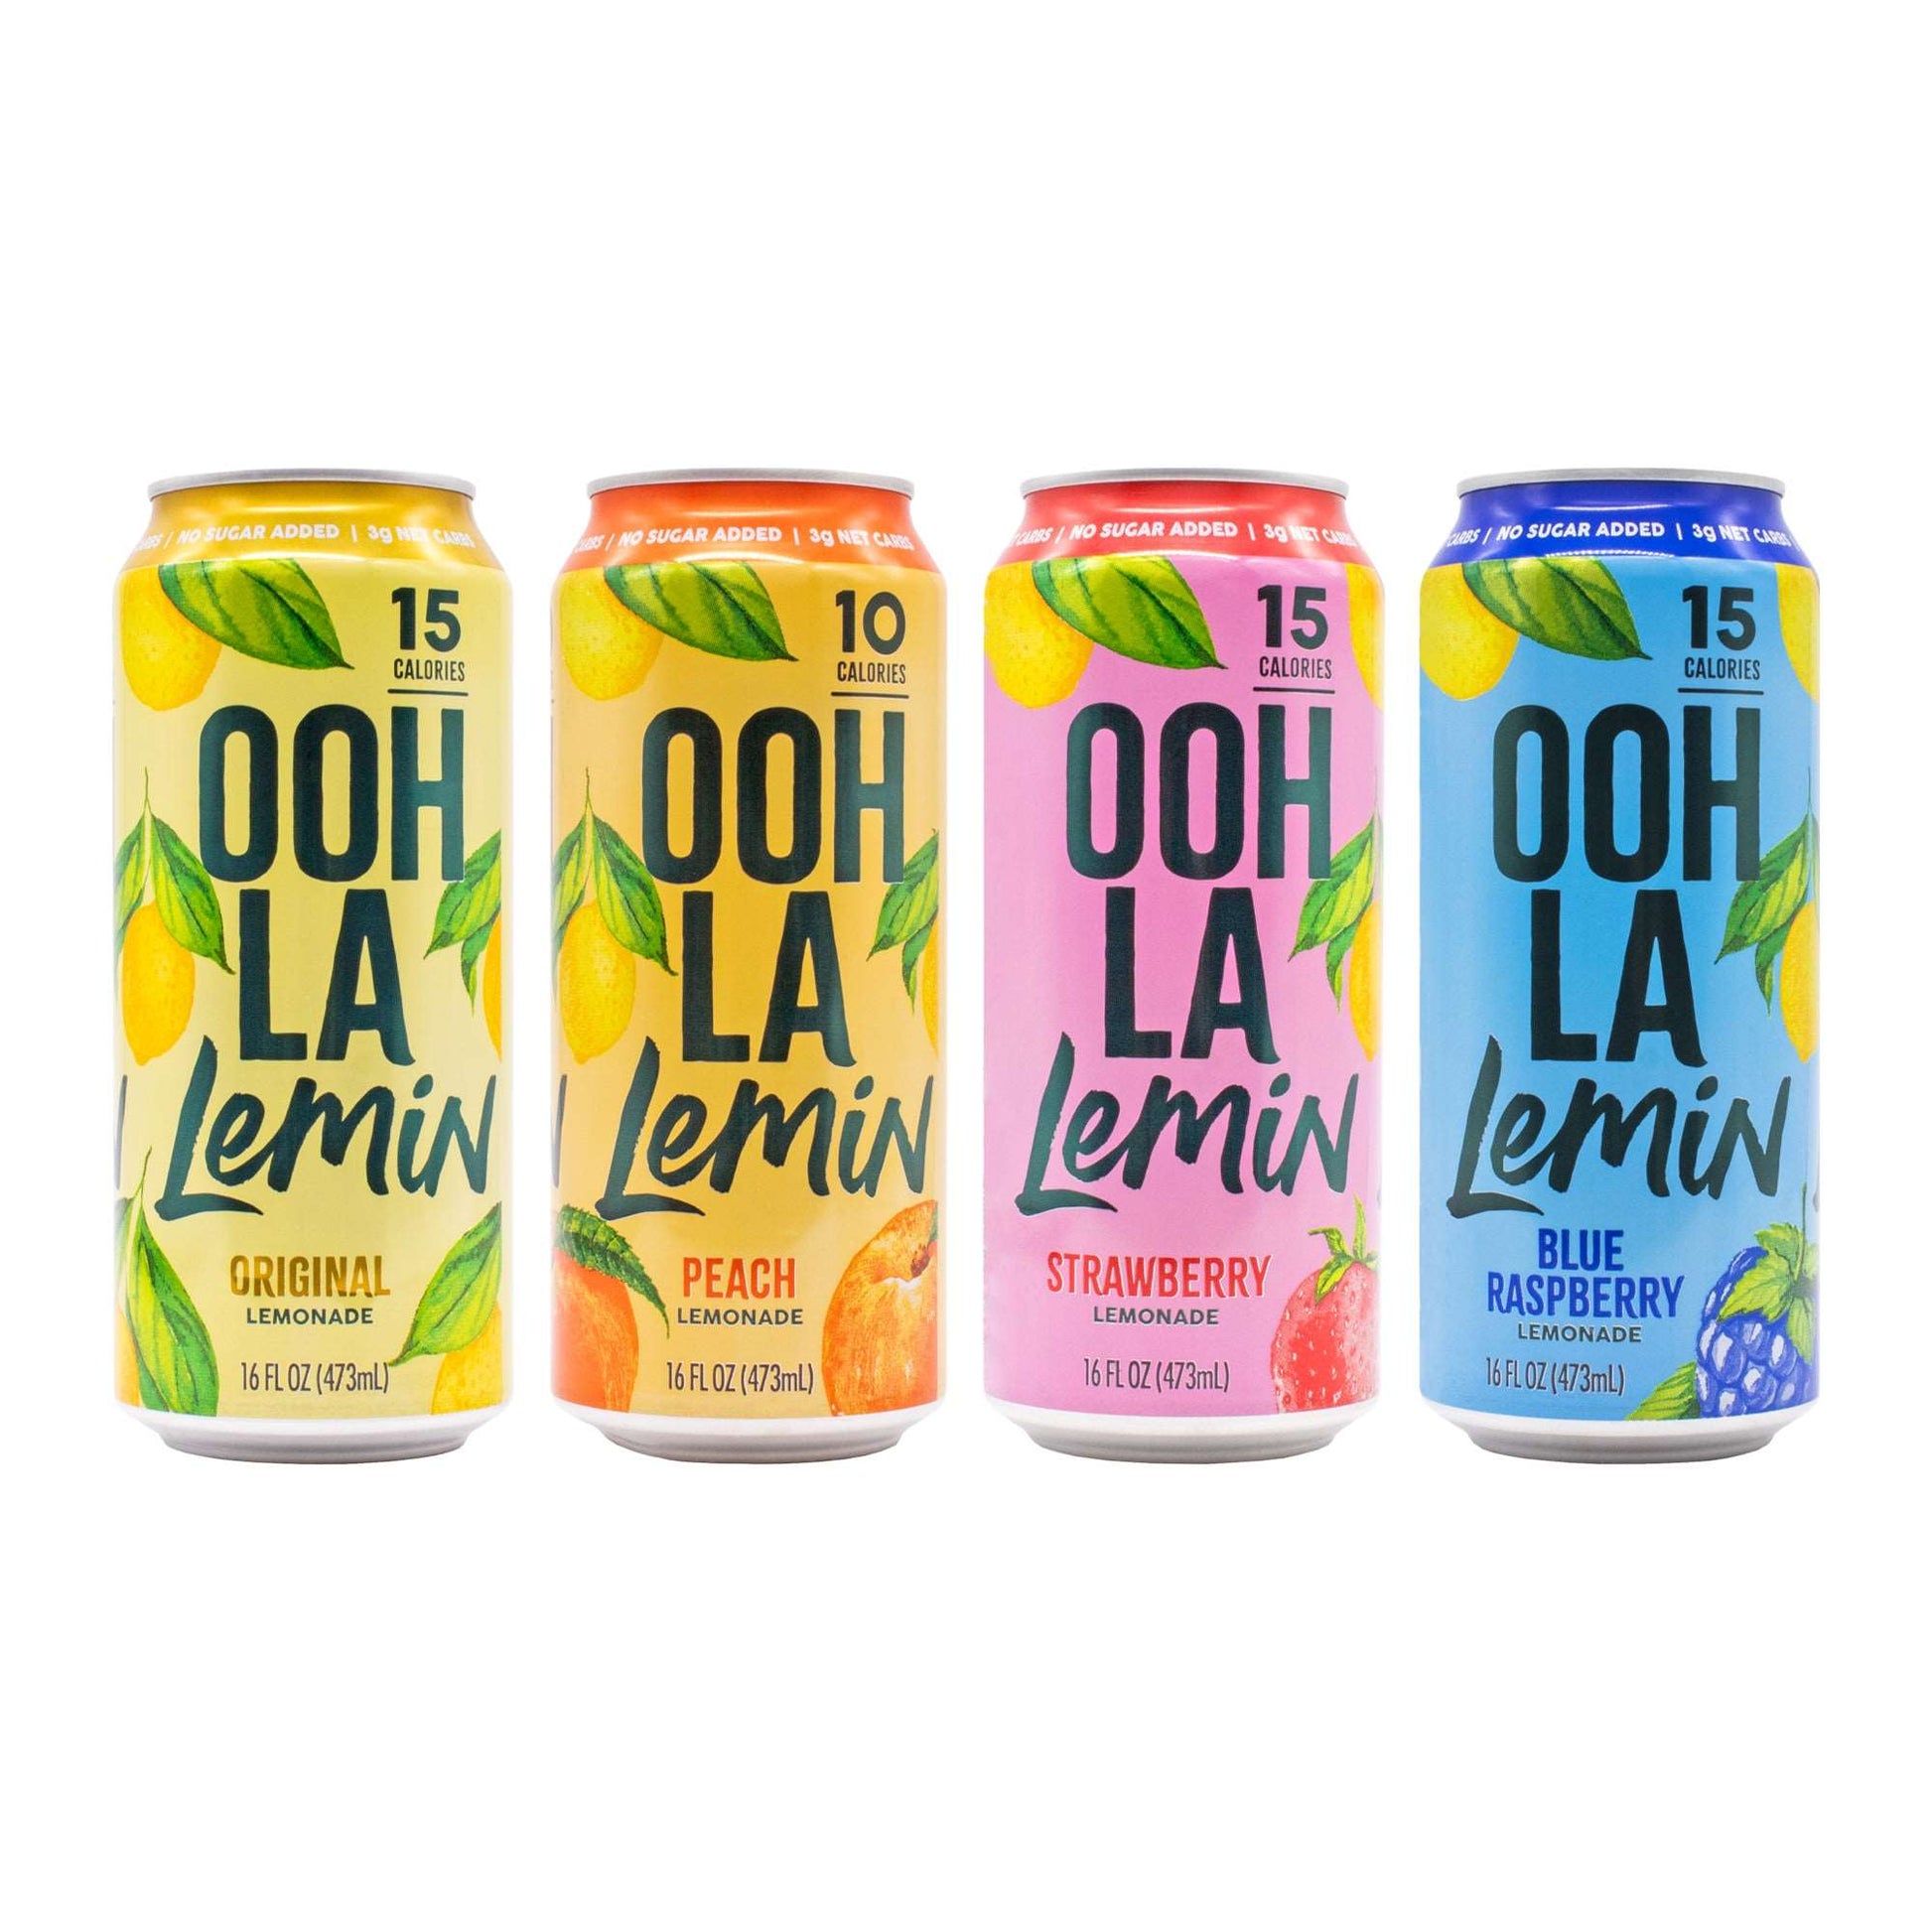 OOH LA Lemin Lemonade Variety 12 Pack